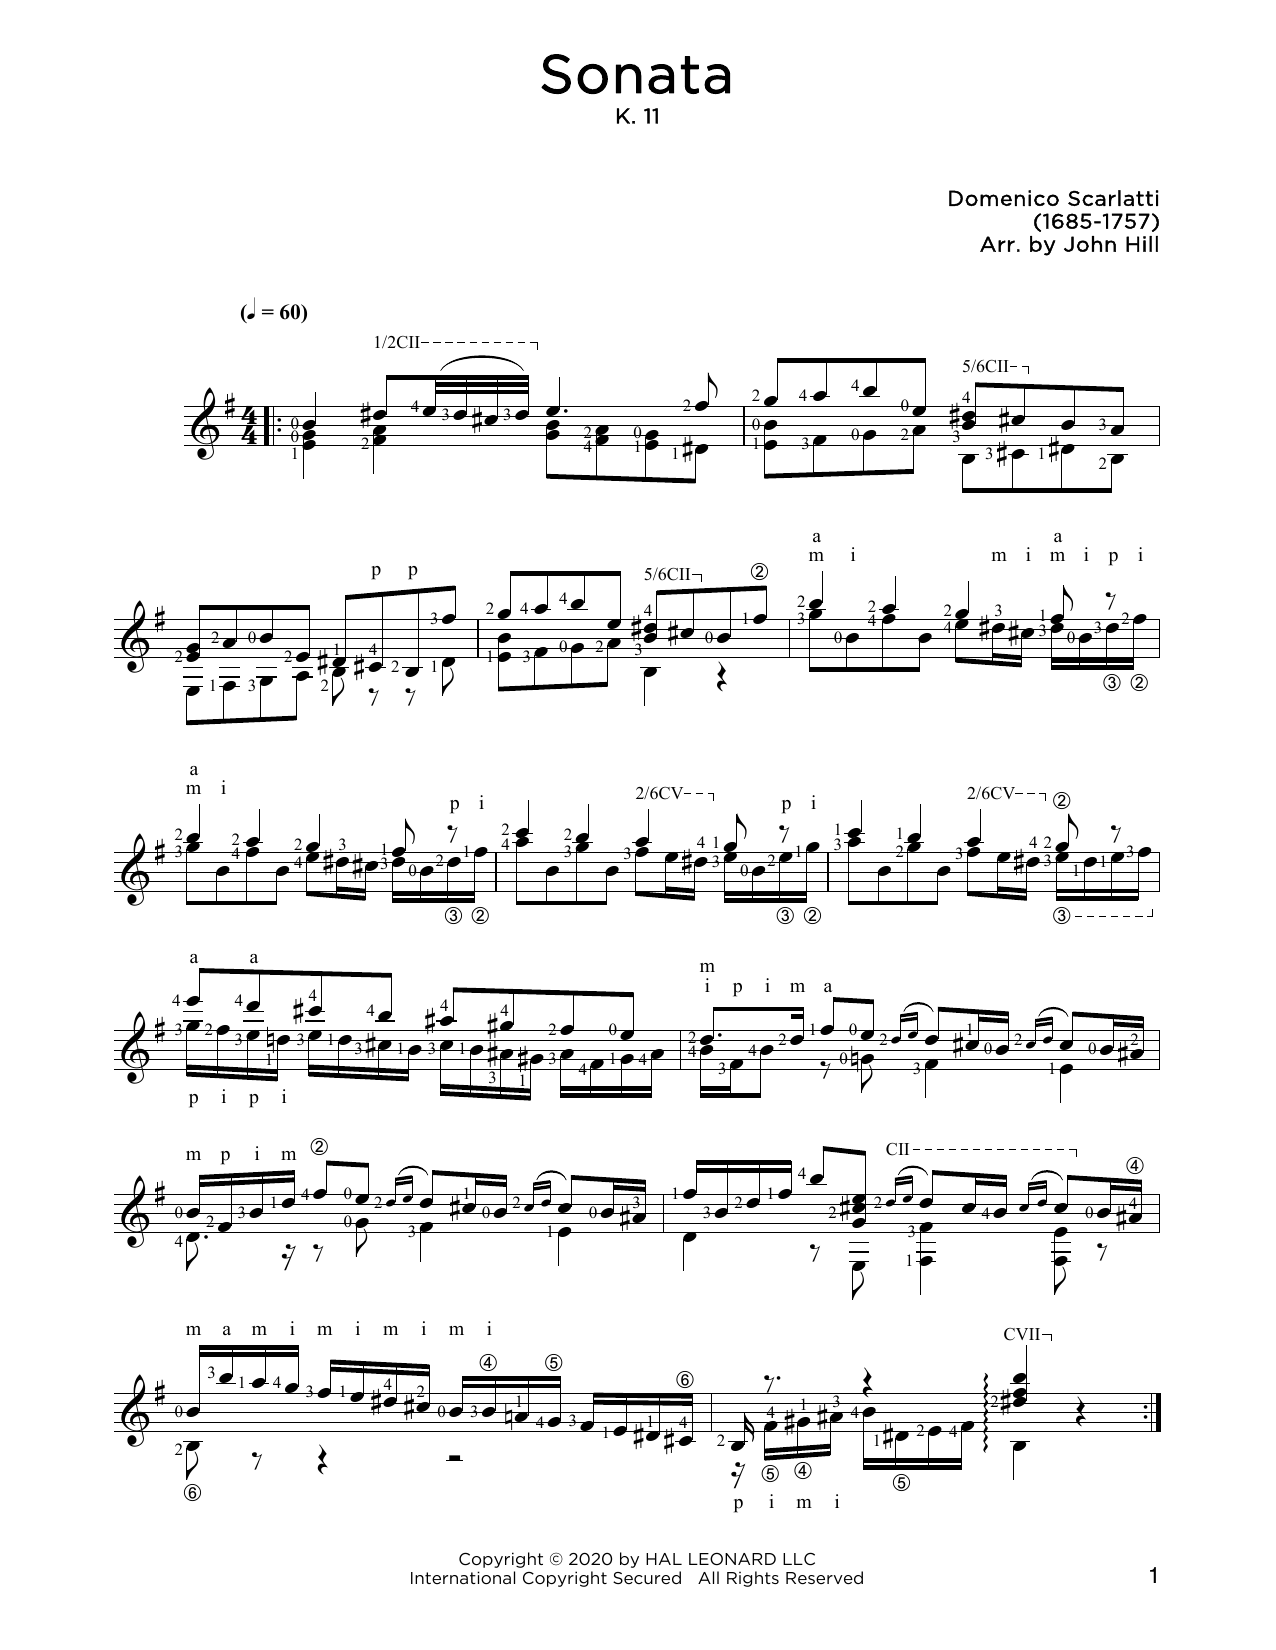 Domenico Scarlatti Sonata, L. 352 sheet music notes and chords arranged for Solo Guitar